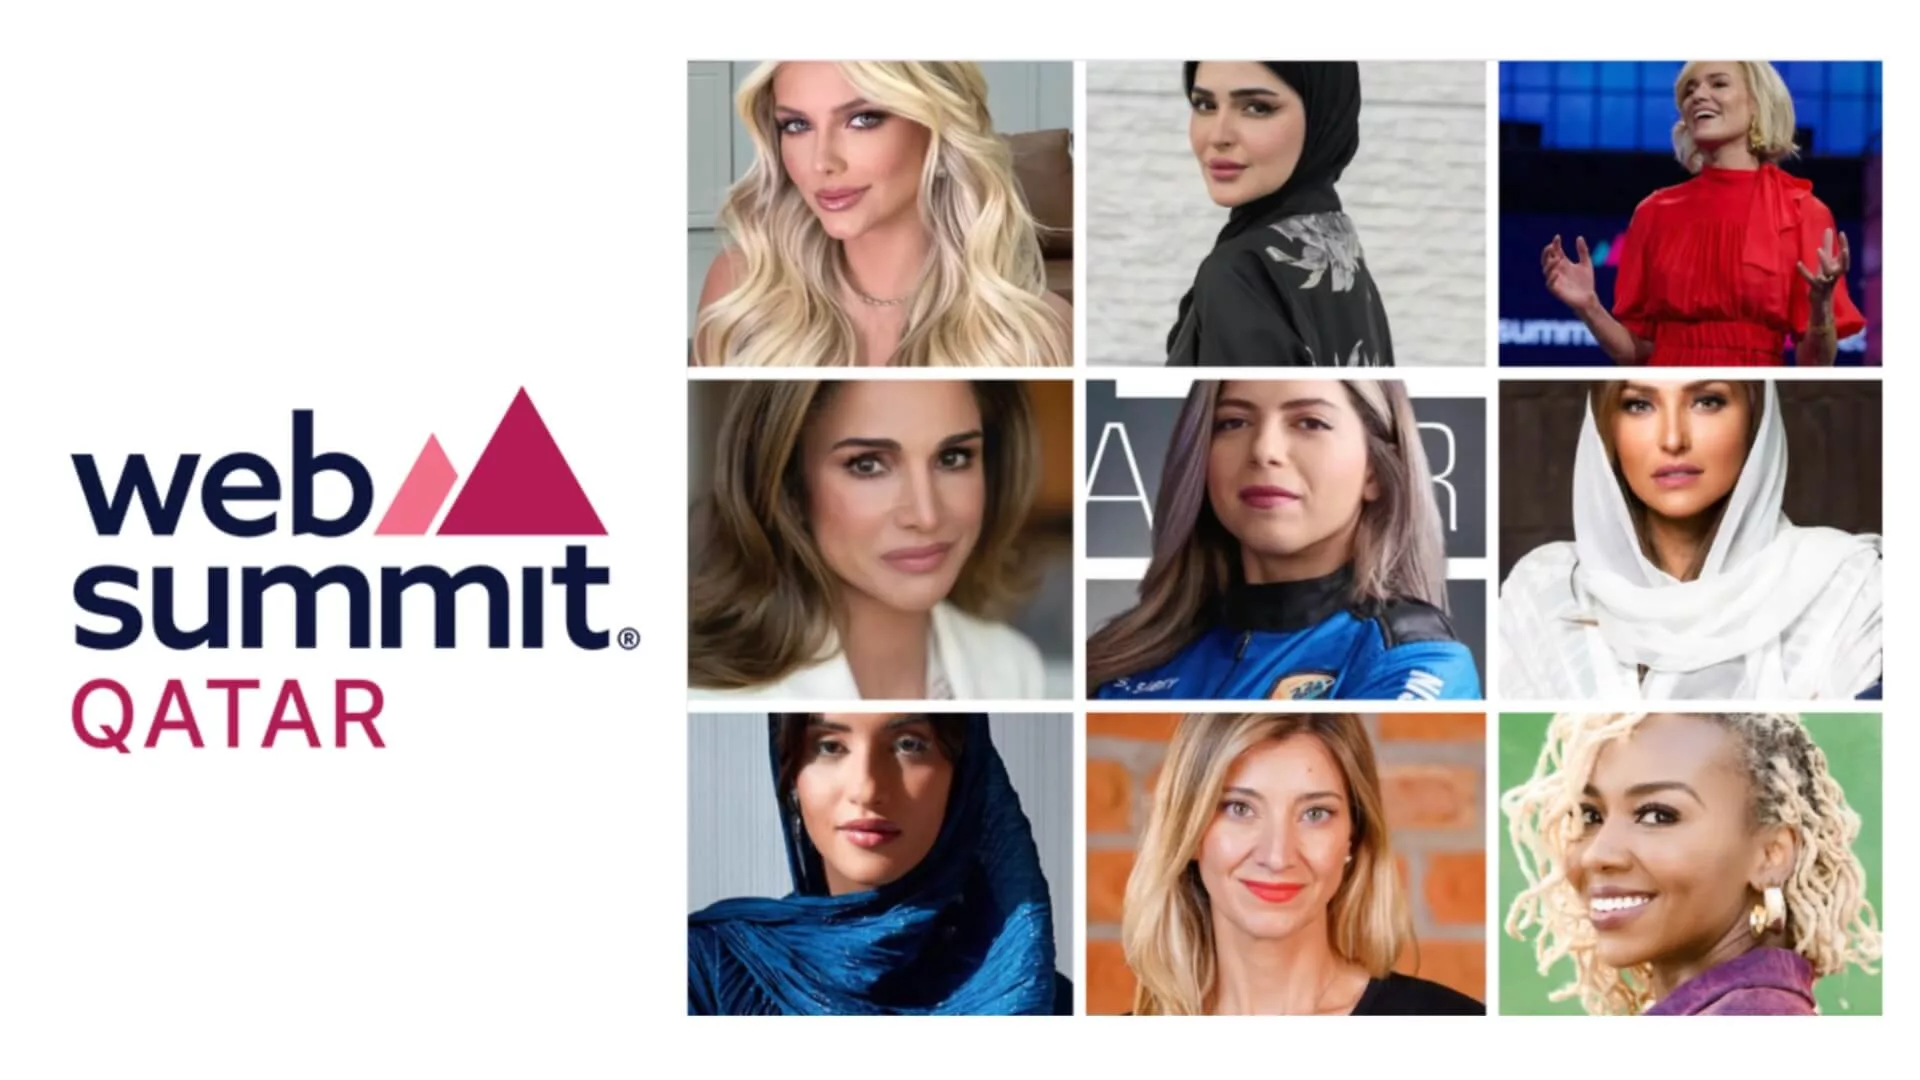 Mulheres lideram discussões sobre inovação no Web Summit Qatar